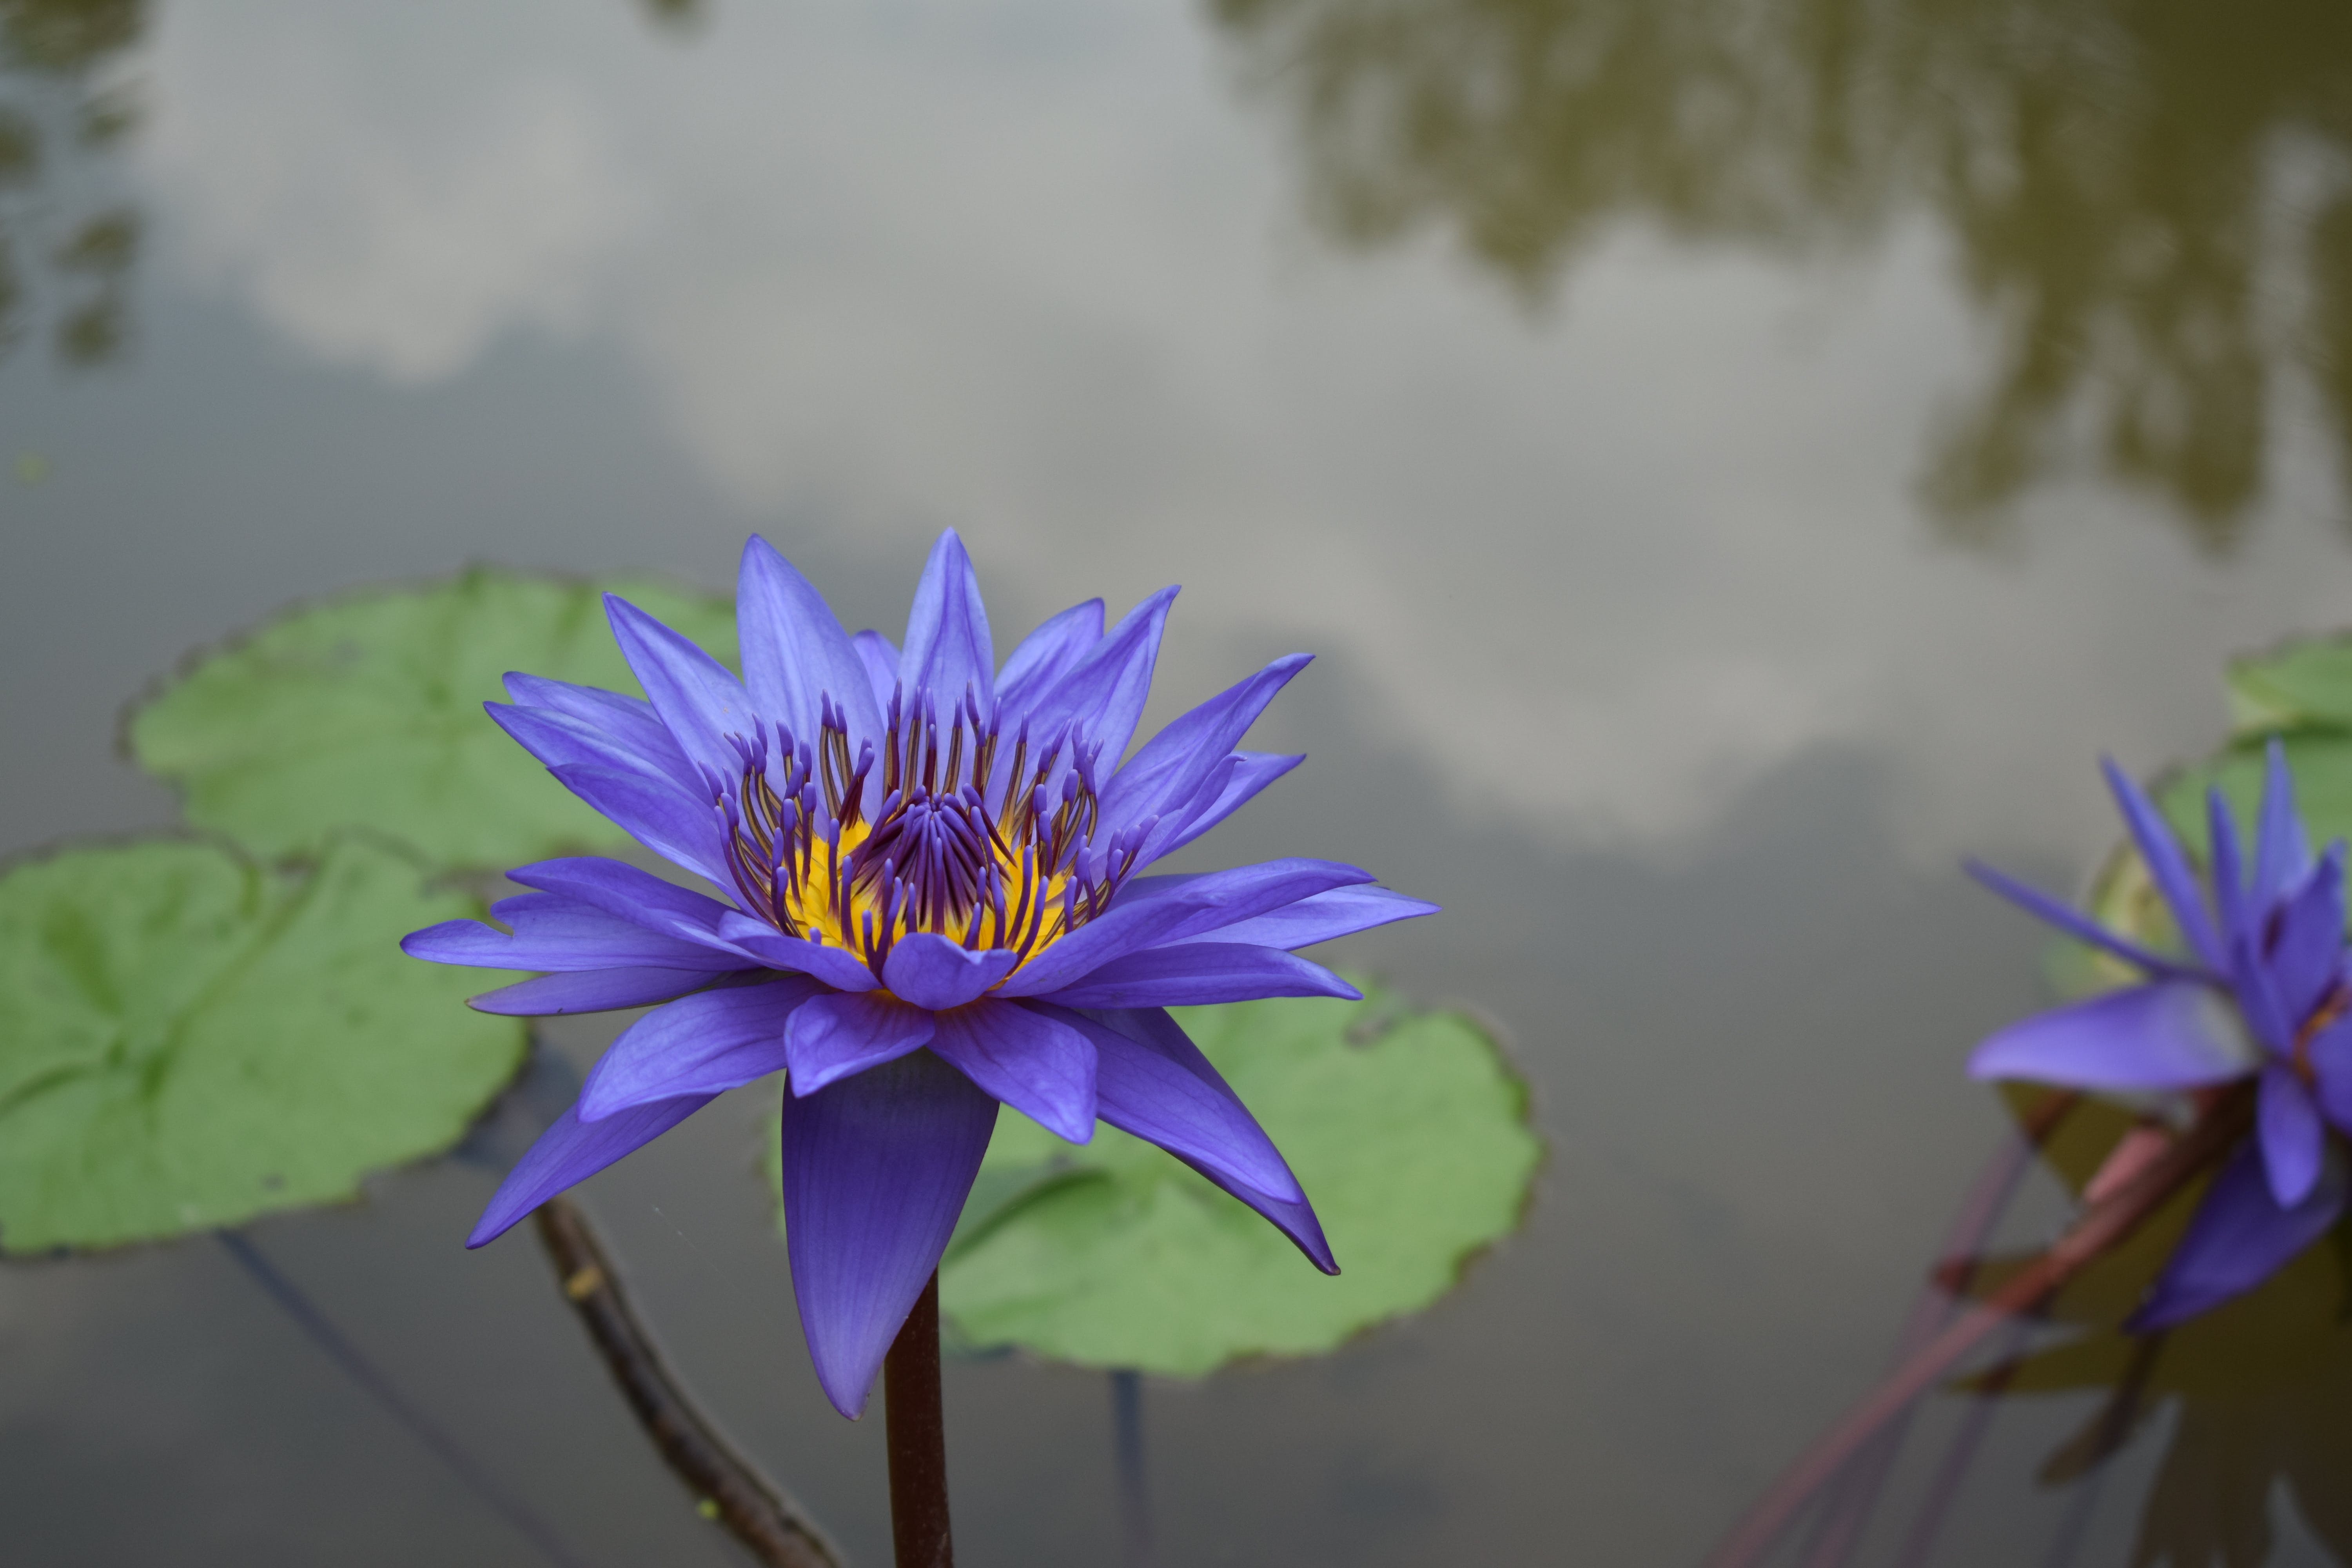 Selective Focus Photo of an Egyptian Lotus Flower · Free Stock Photo